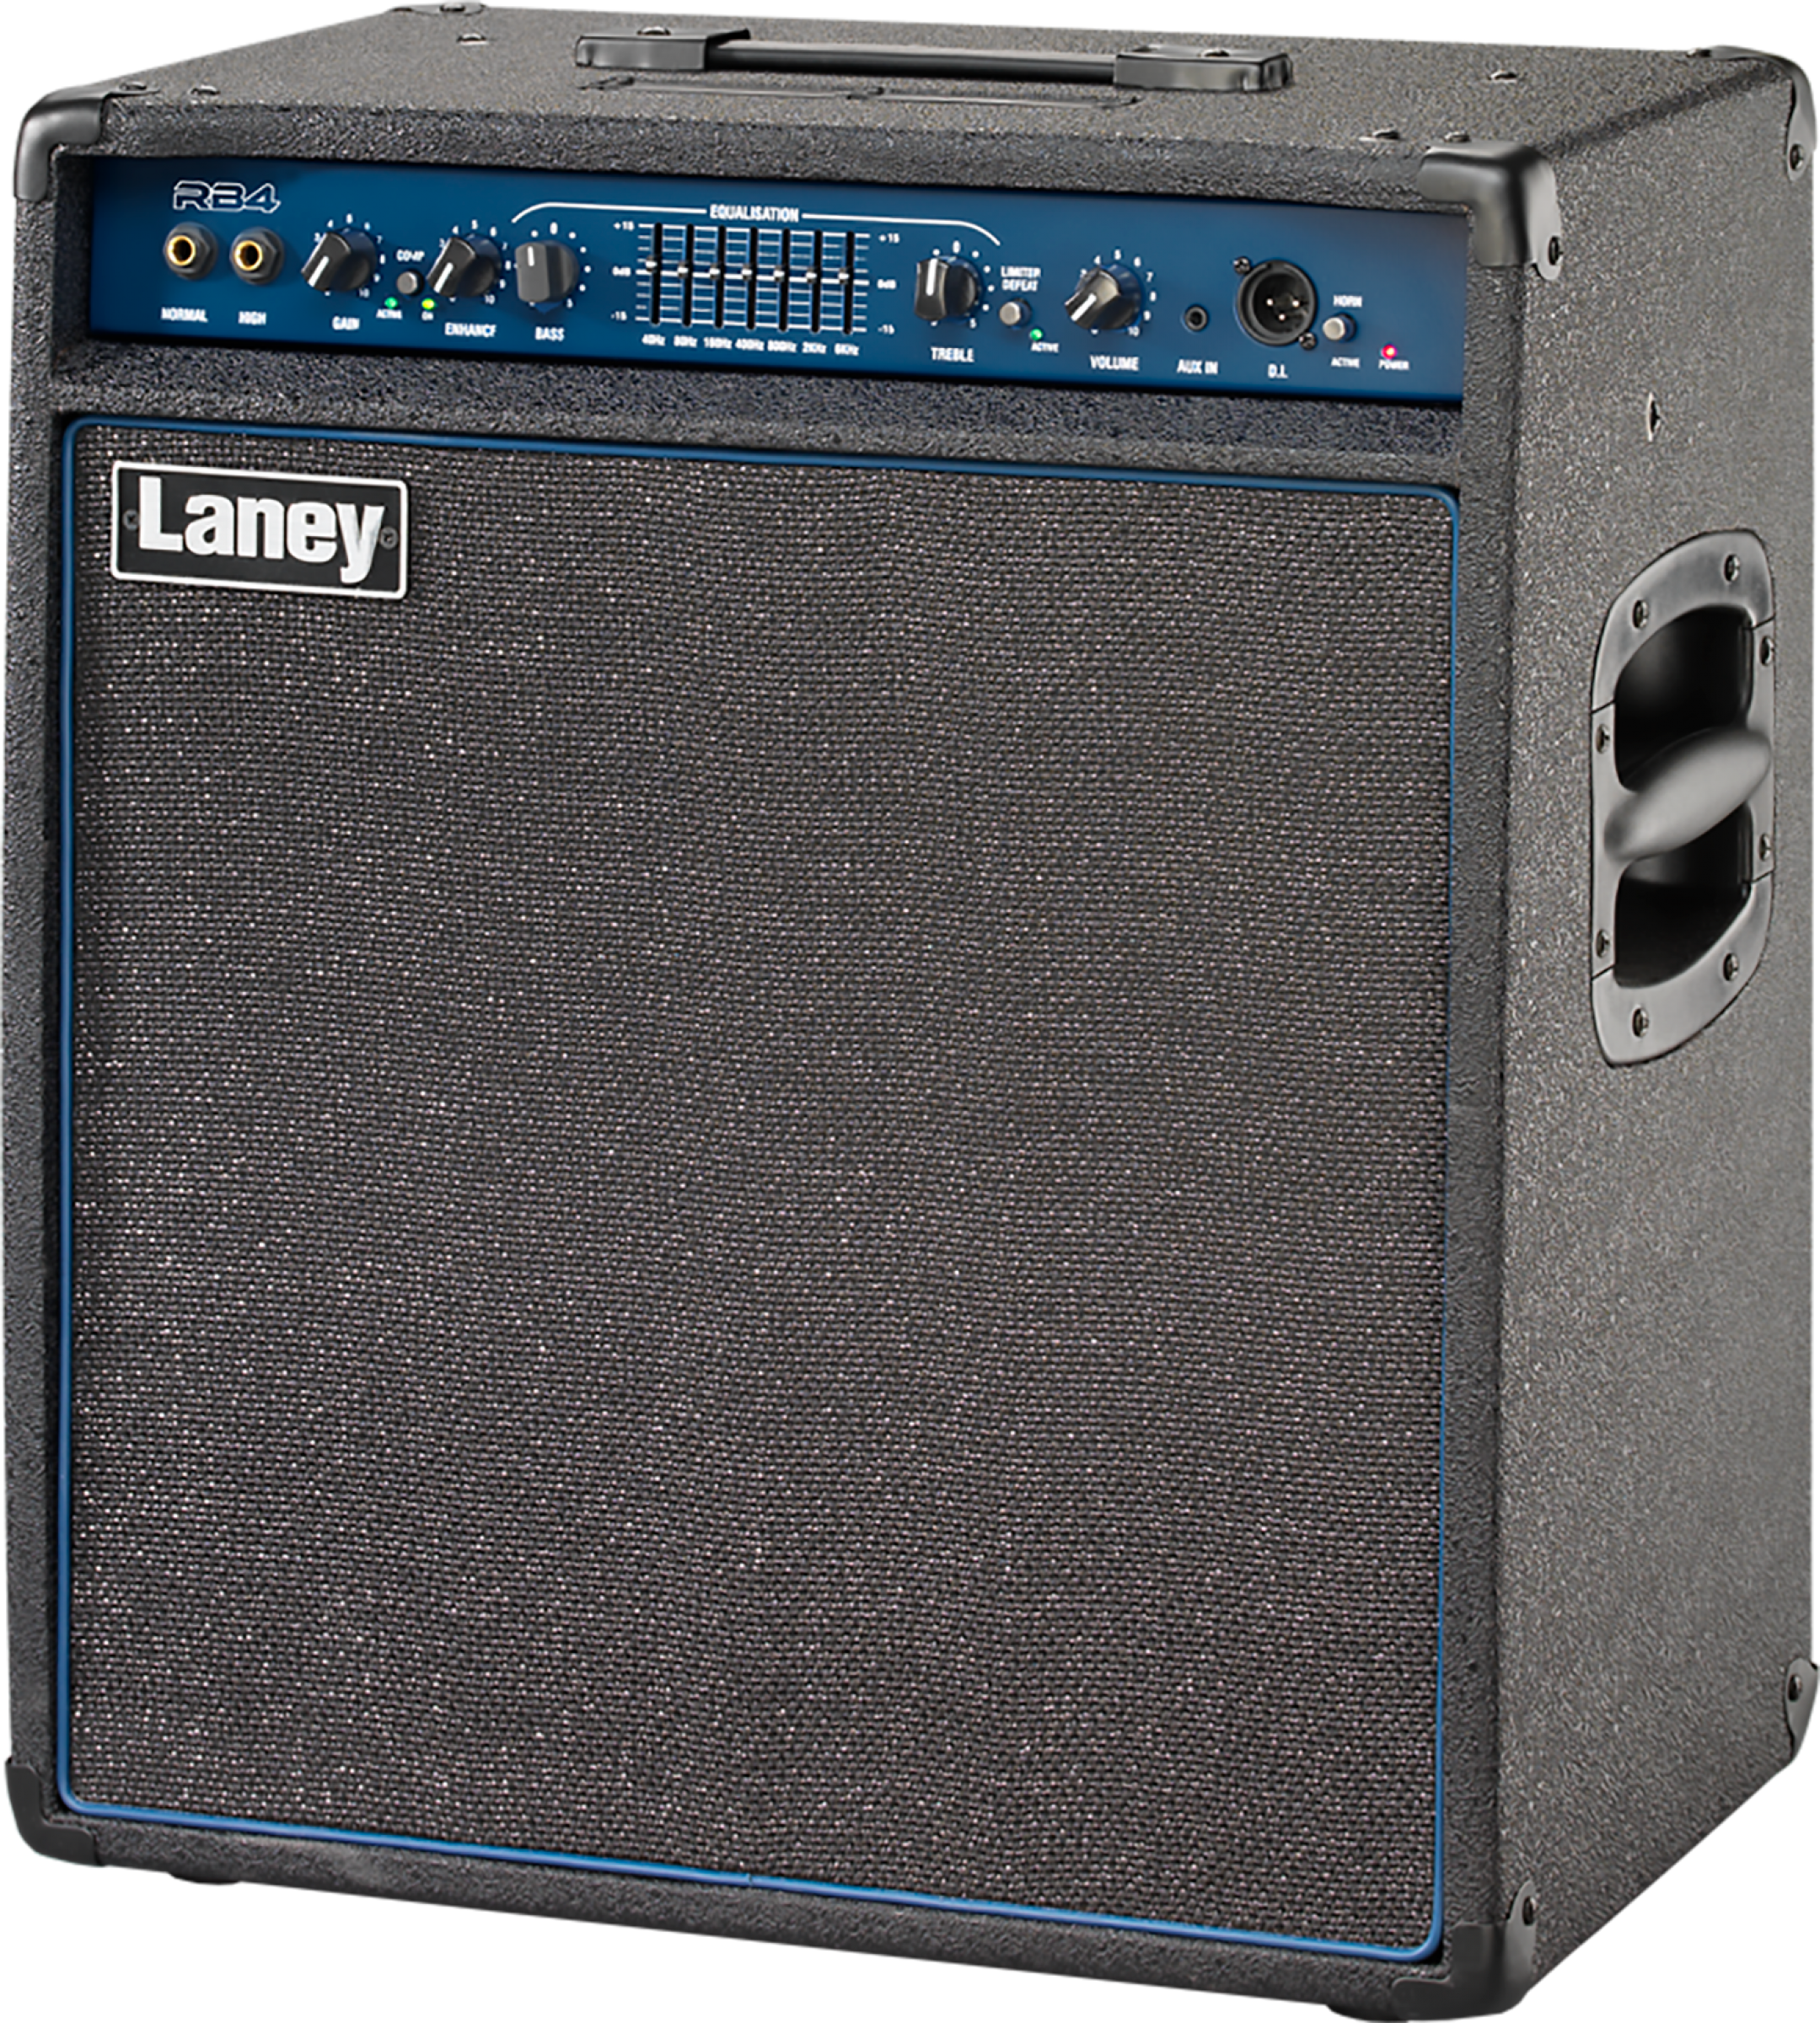 Laney Rb4 165w 1x15 - Combo Ampli Basse - Variation 2